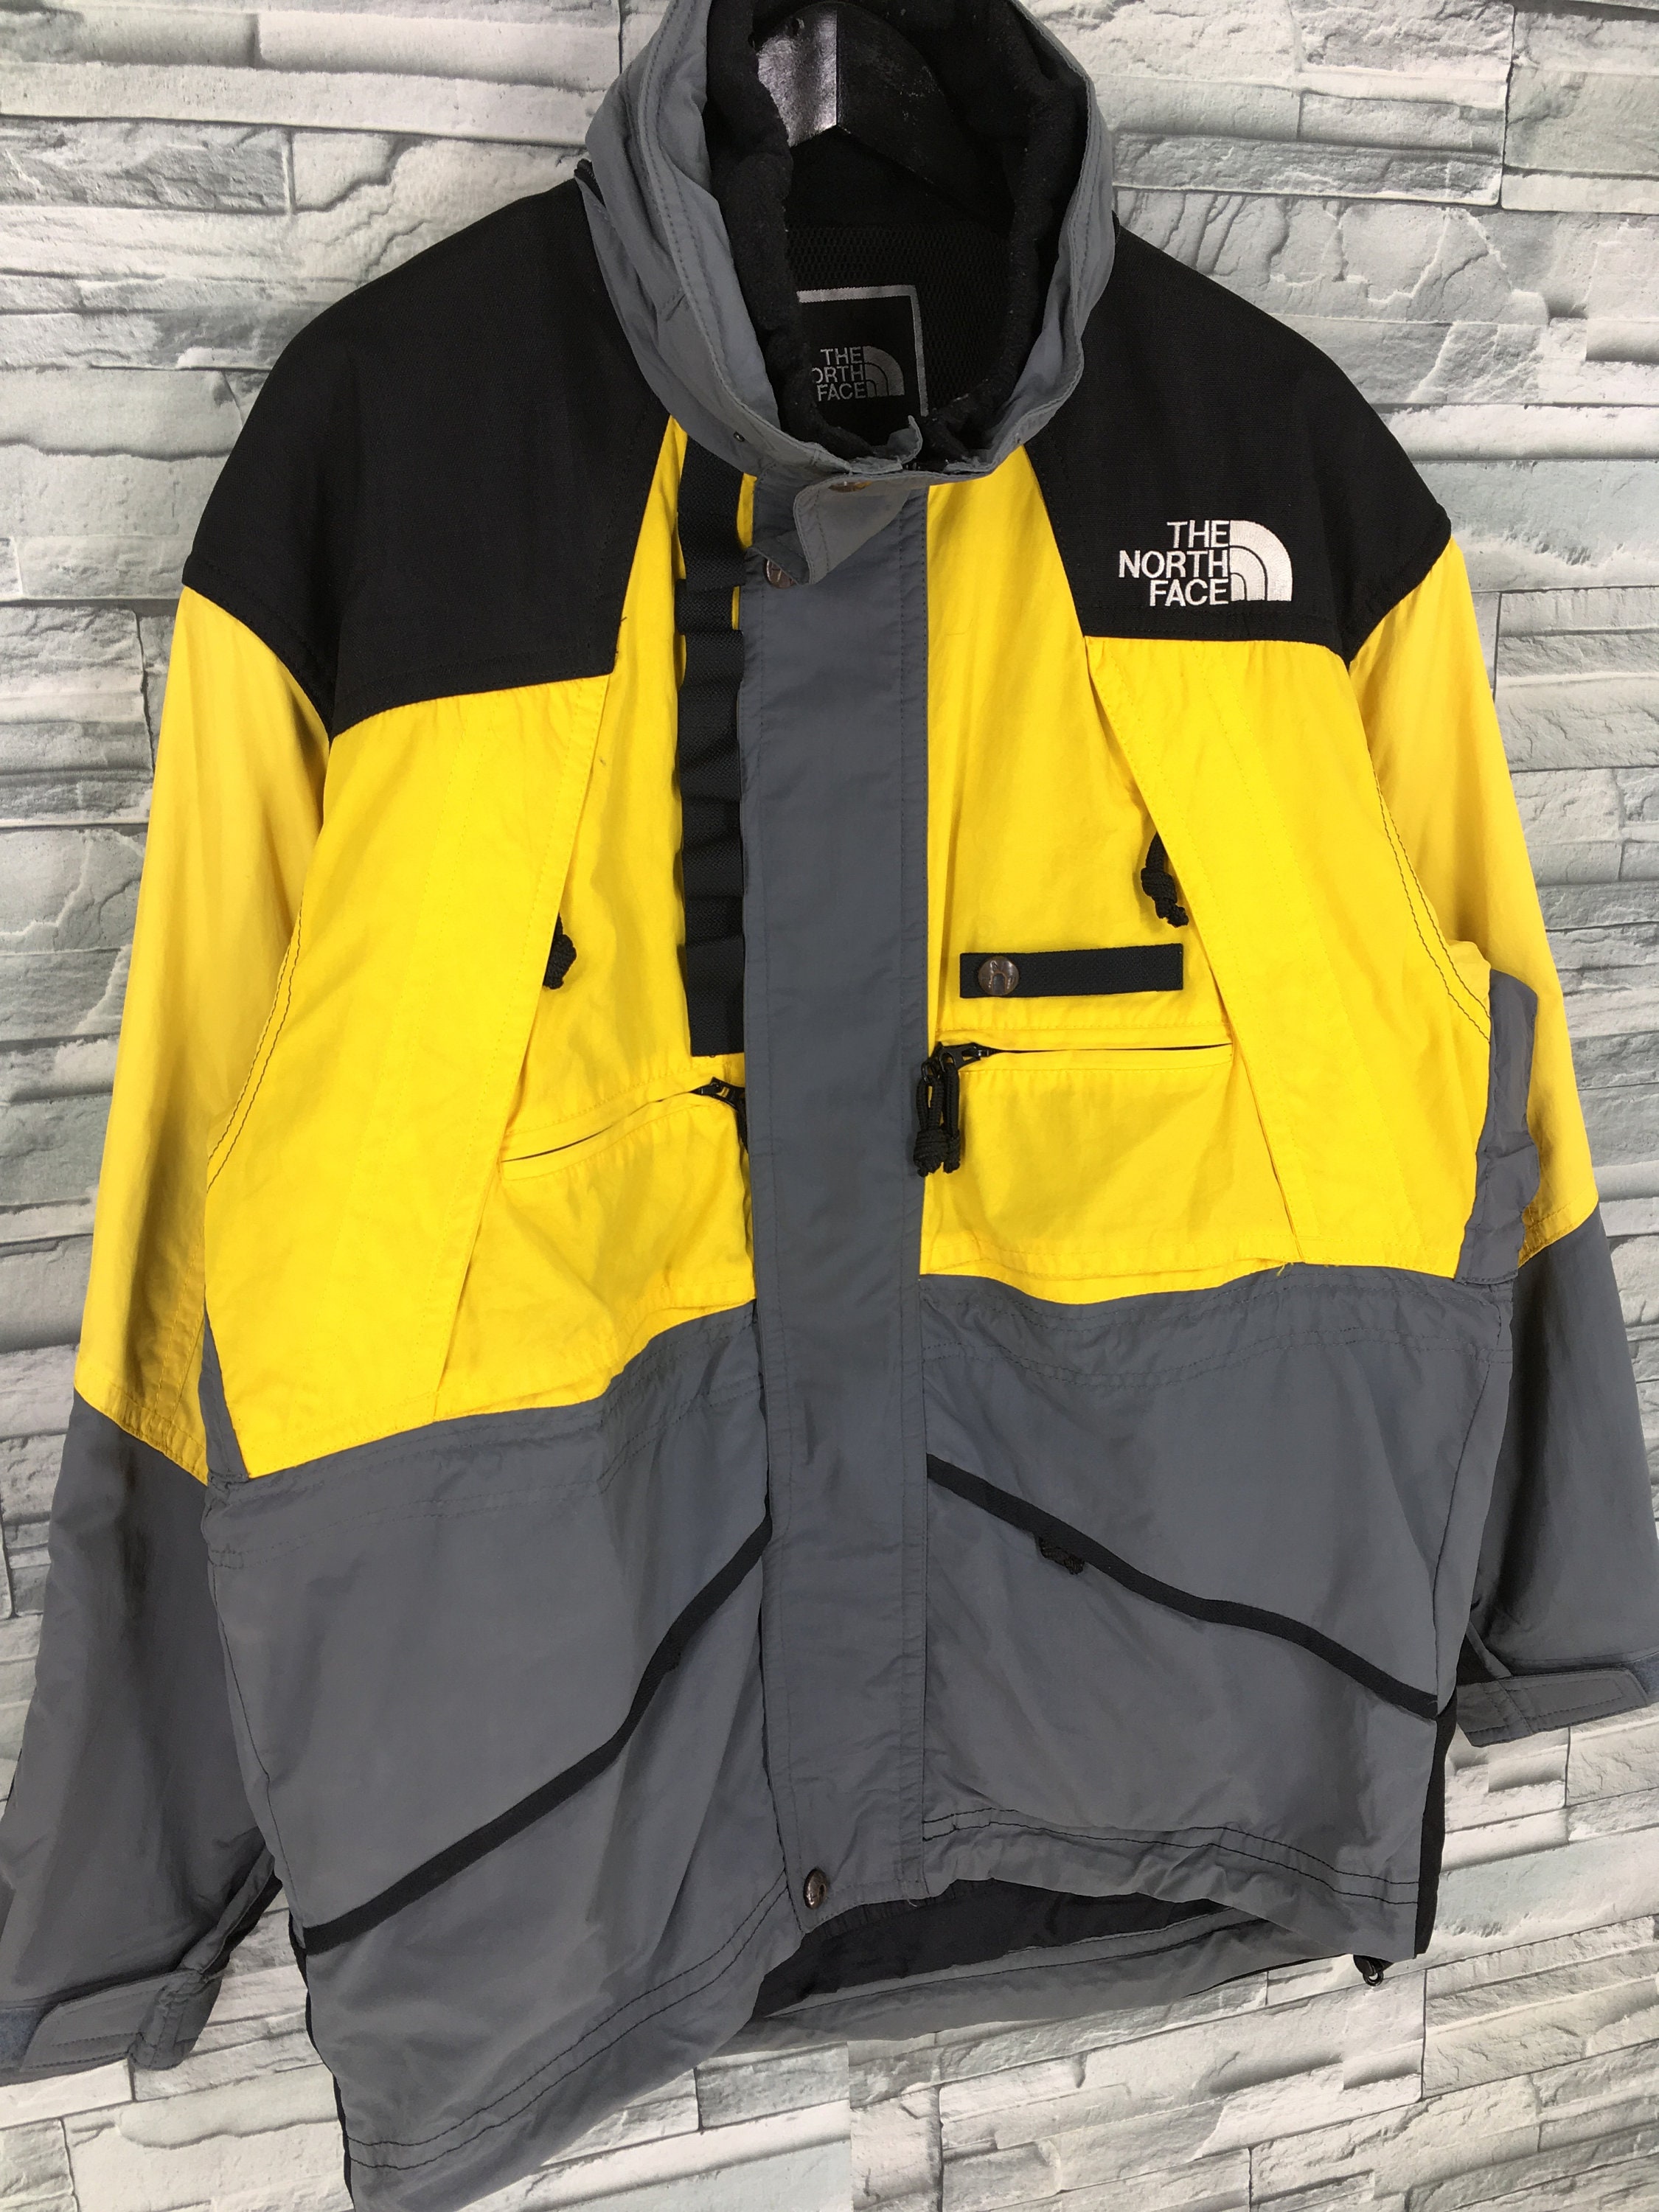 The North Face Jacket Xlarge Vintage 90's North Face Ski | Etsy